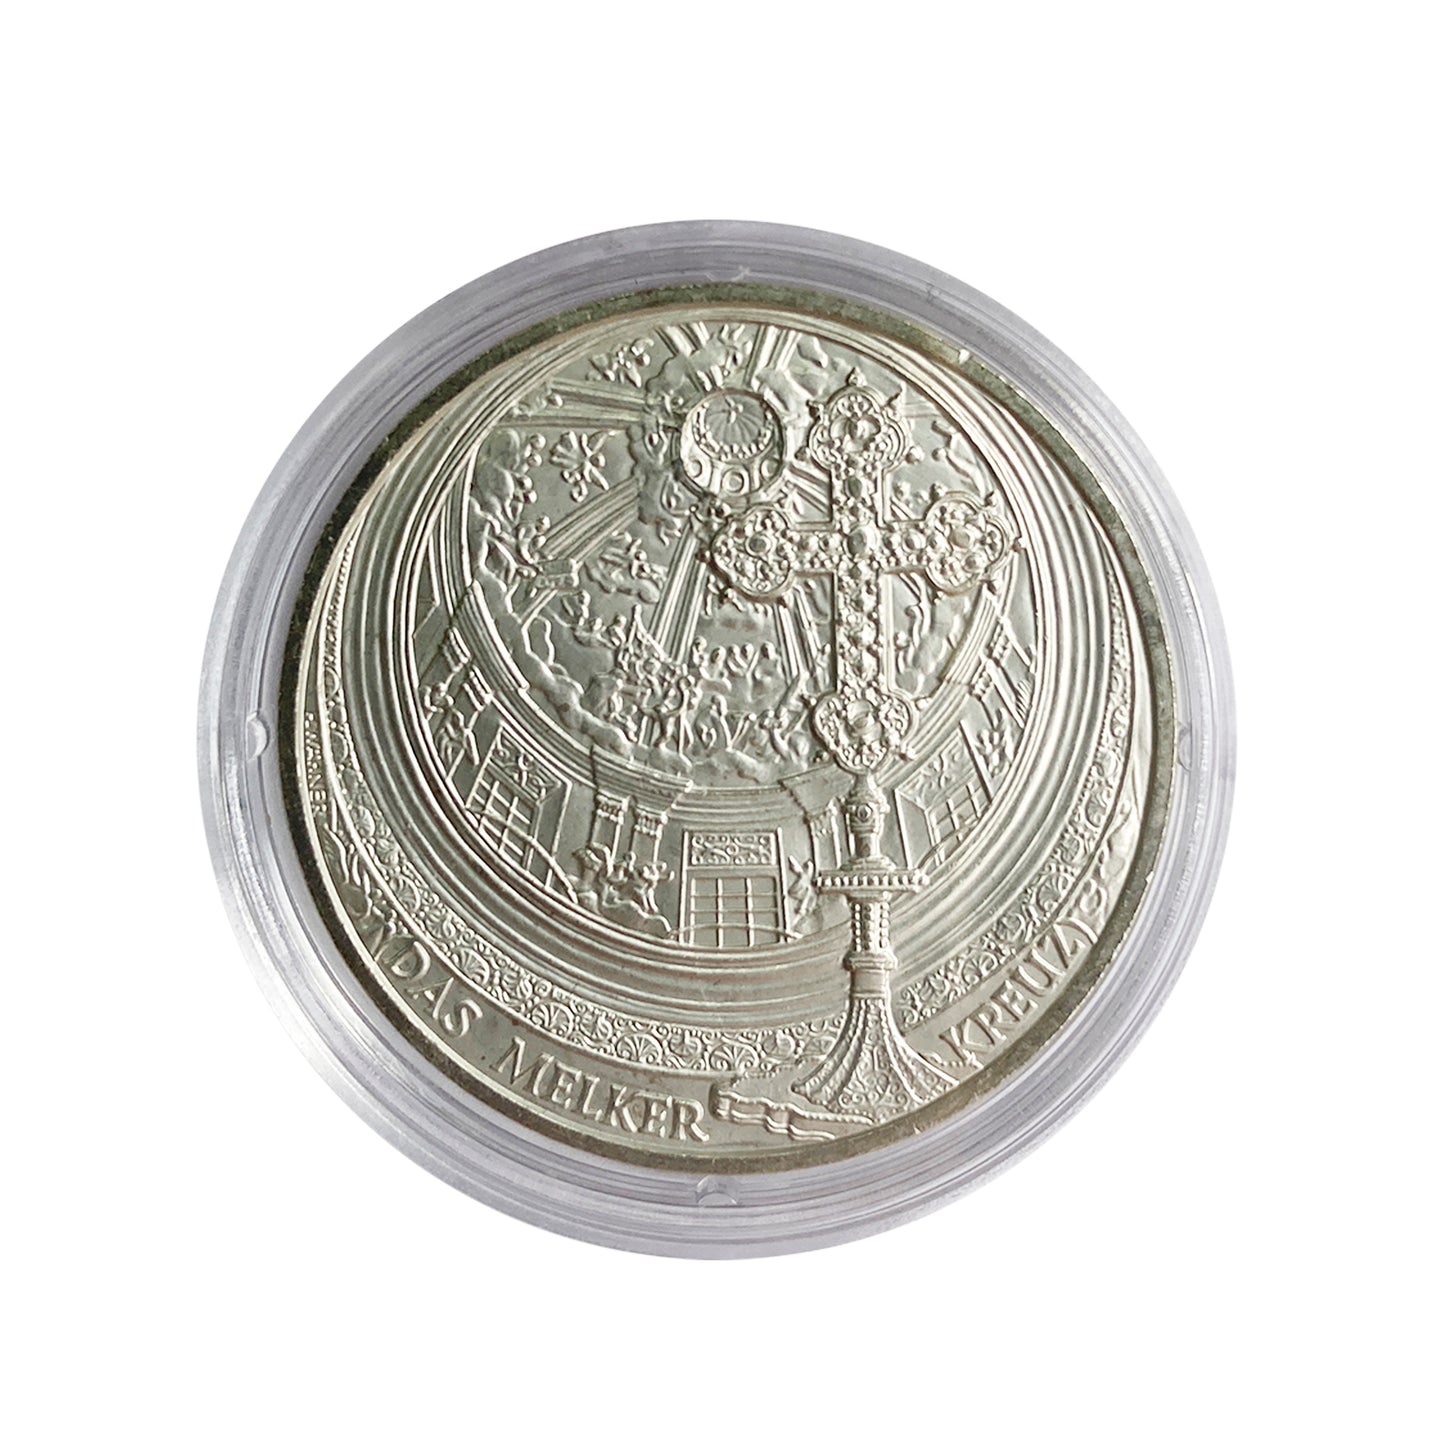 Austria - Moneda 10 euros plata 2007 - Abadía de Melk